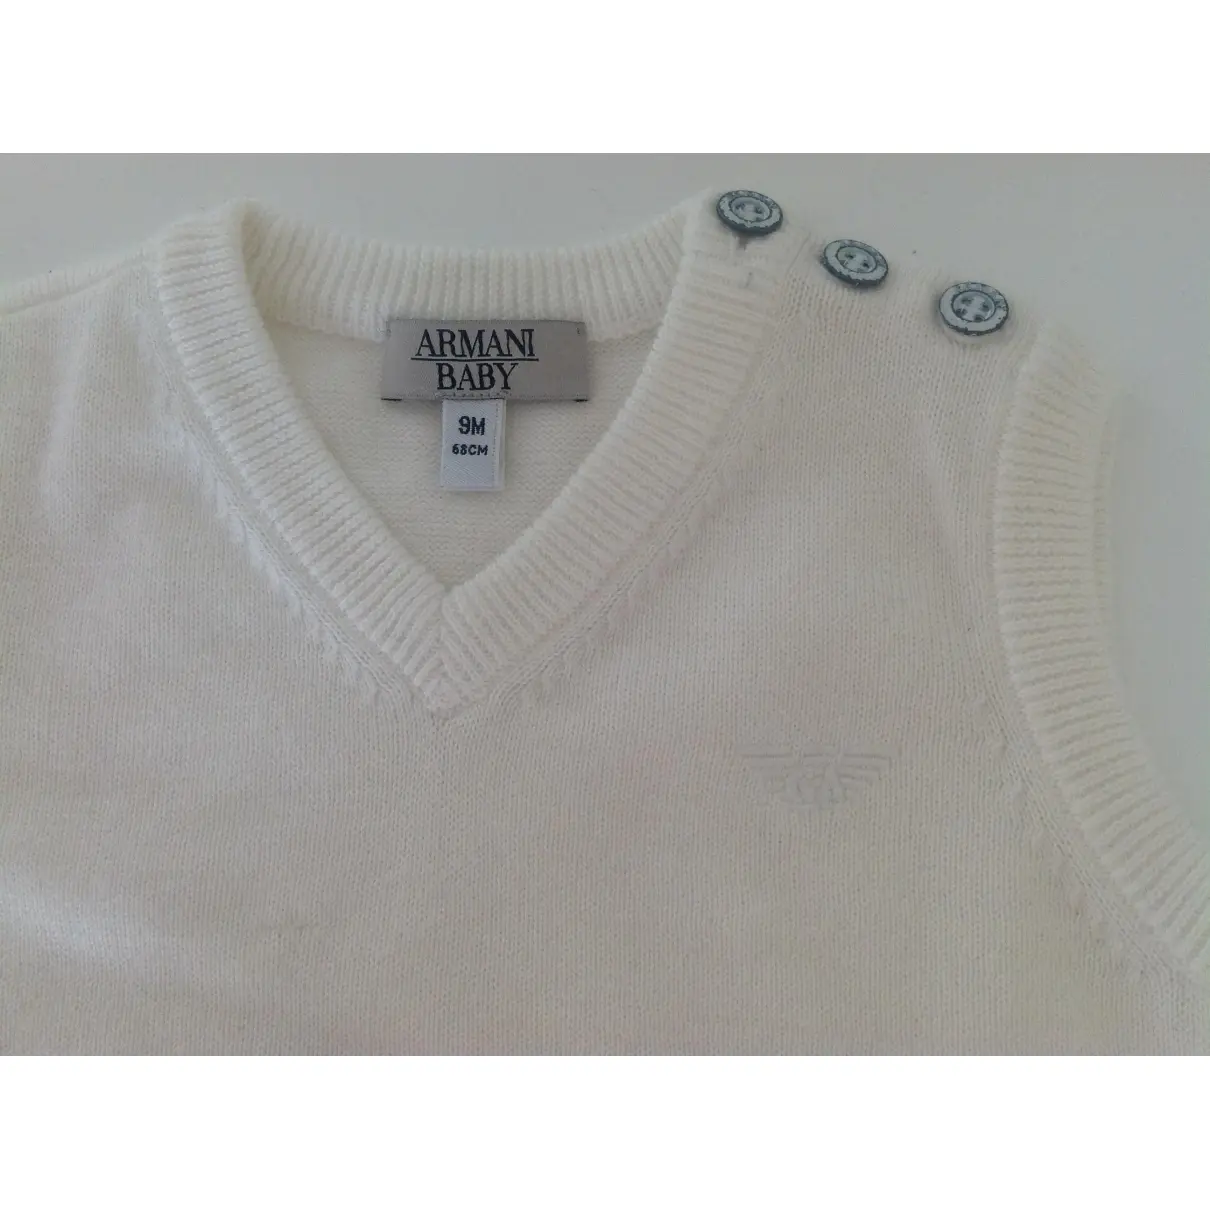 Armani Baby Jacket for sale